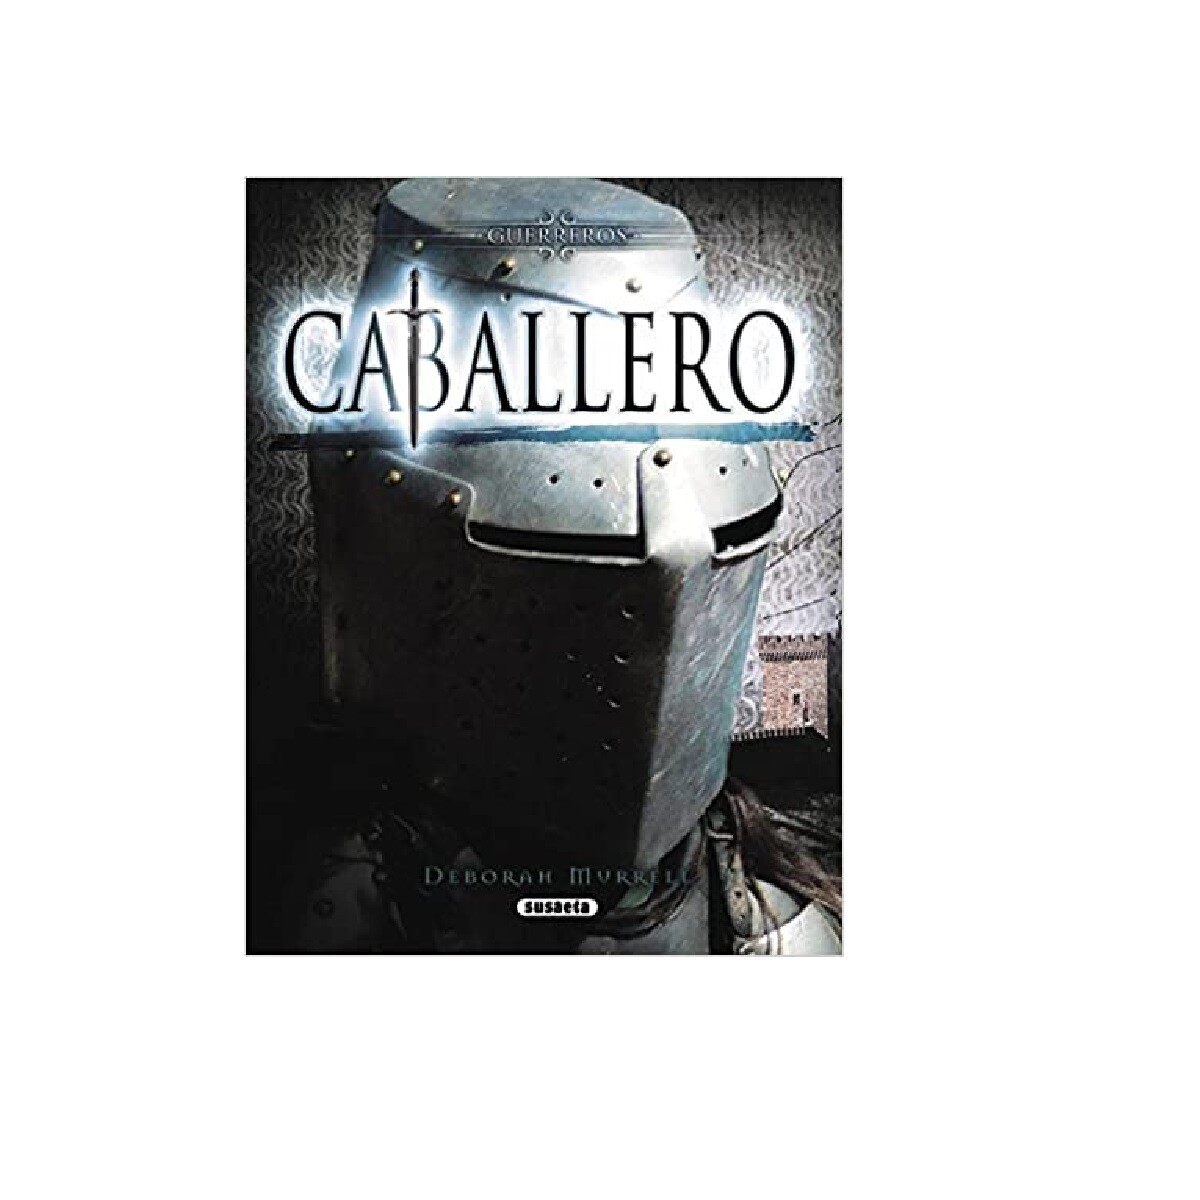 GUERREROS - CABALLERO 503 S101 C10012 - Único 